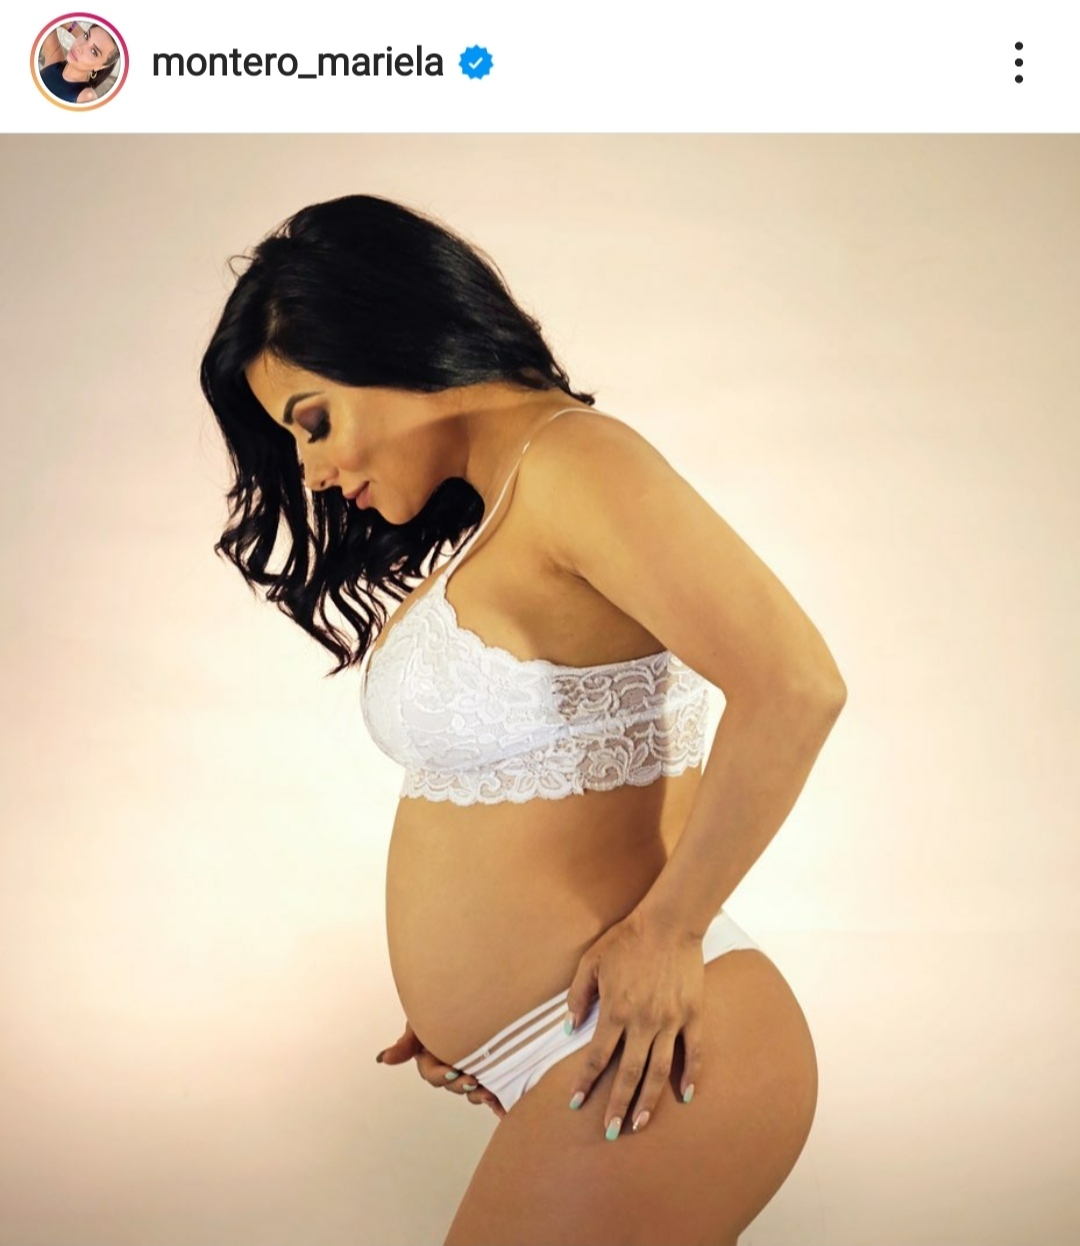 Mariela Montero embarazo